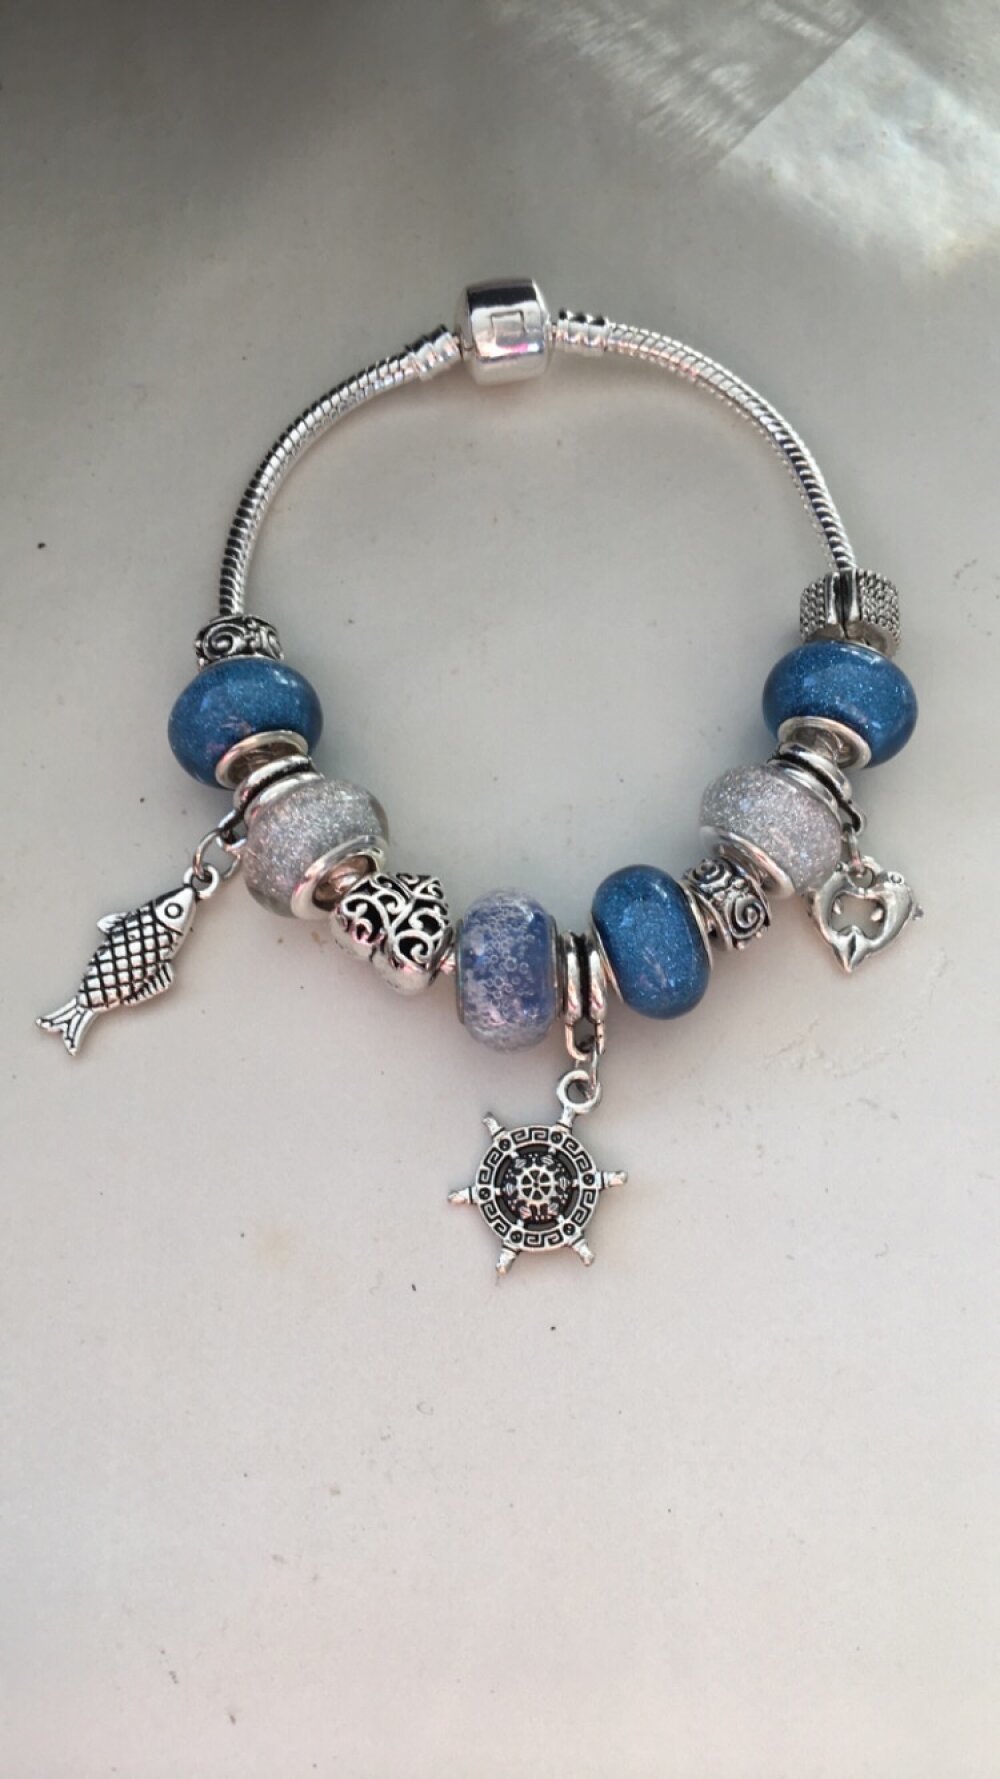 Bracelet souple style pandora 20 cm avec perles européennes bleu